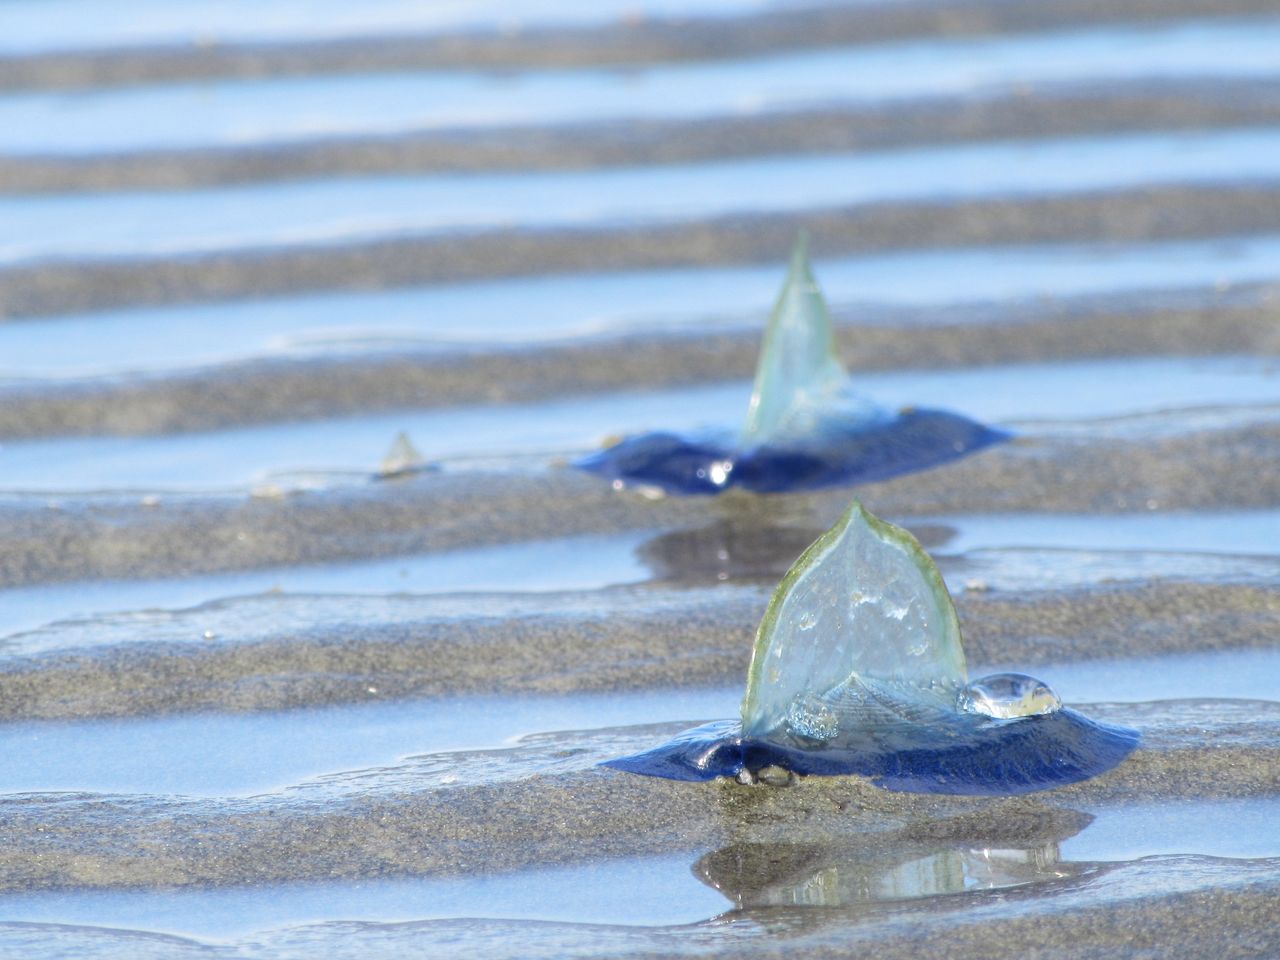 Blue jellyfish relatives swarm California beaches amid climate change